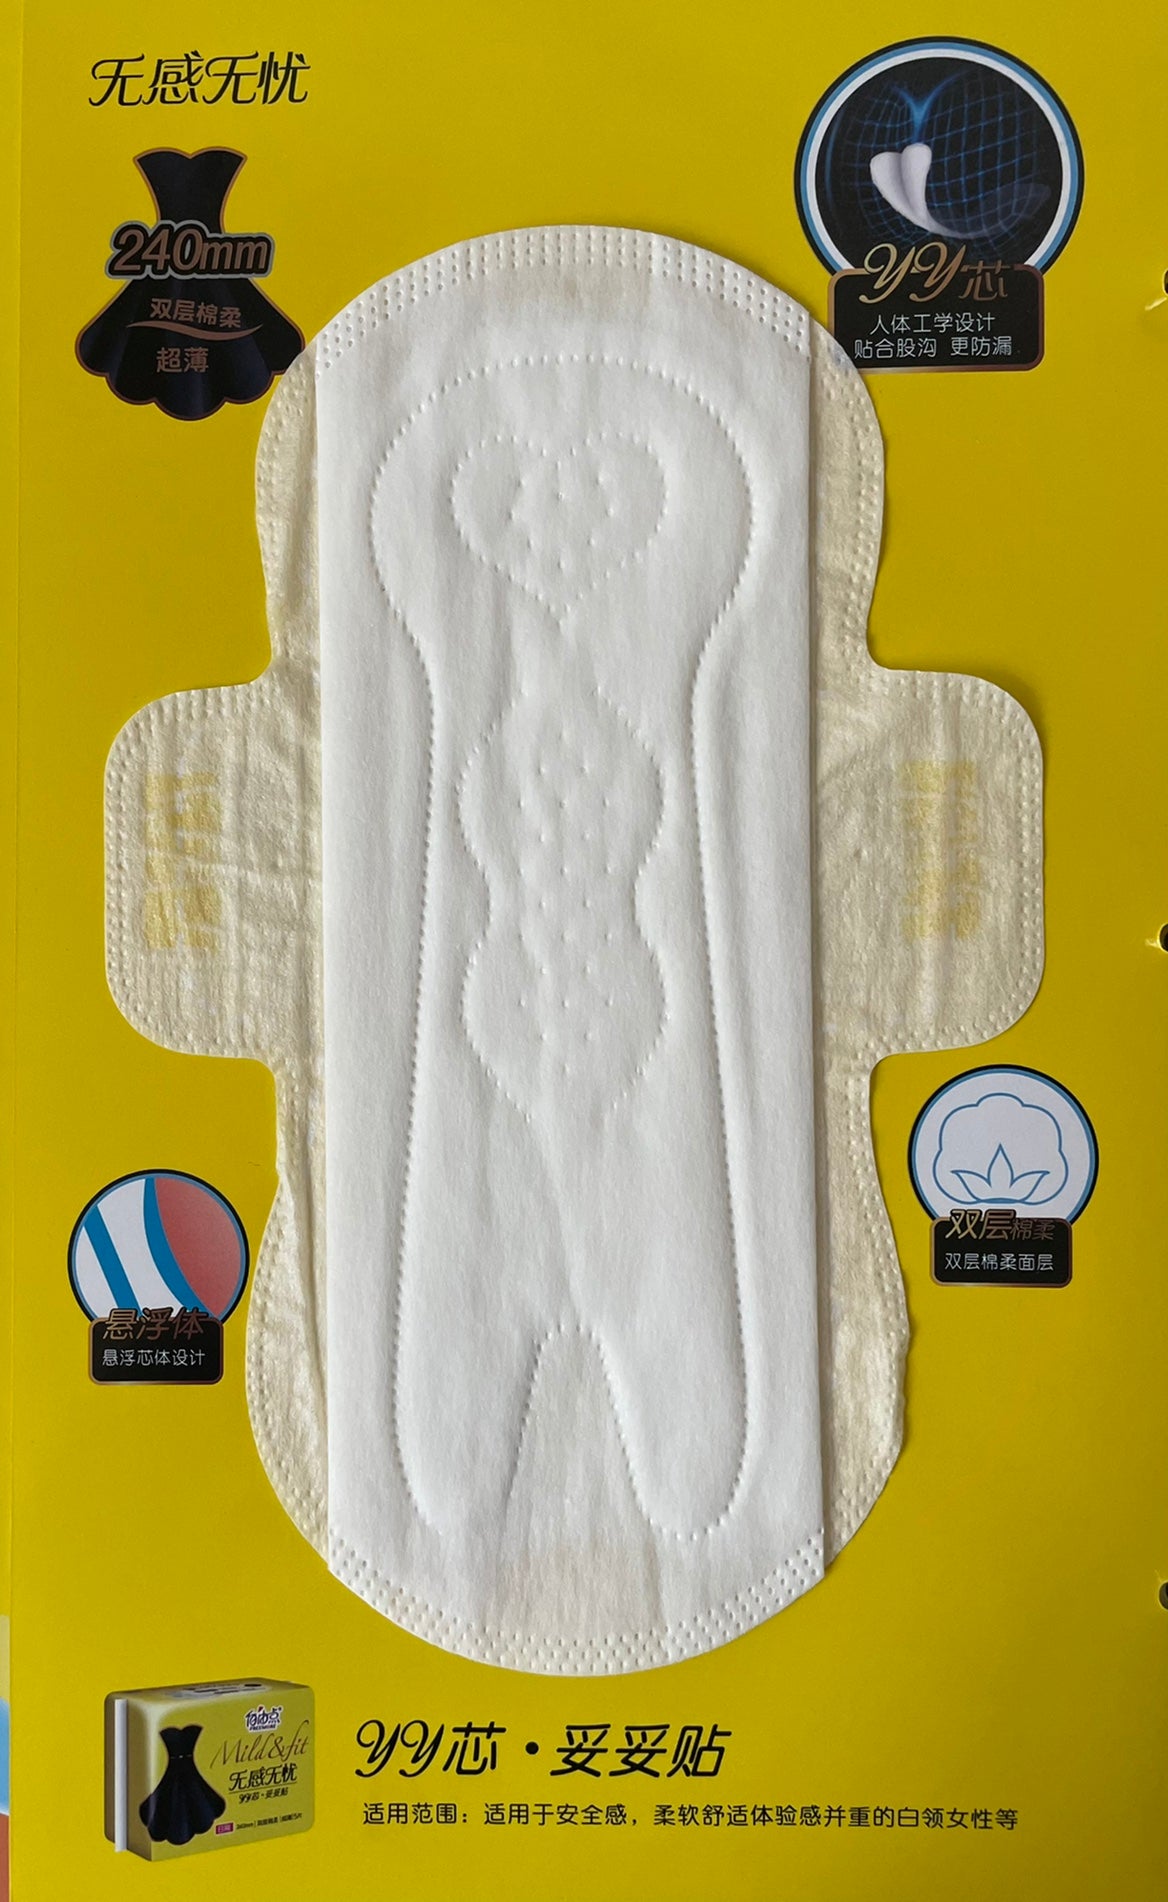 FREEMORE Wuganwuyou Double Soft Sanitary Pads 240mm*8+2 Pcs (Day) 自由点无感无忧日用棉柔卫生巾